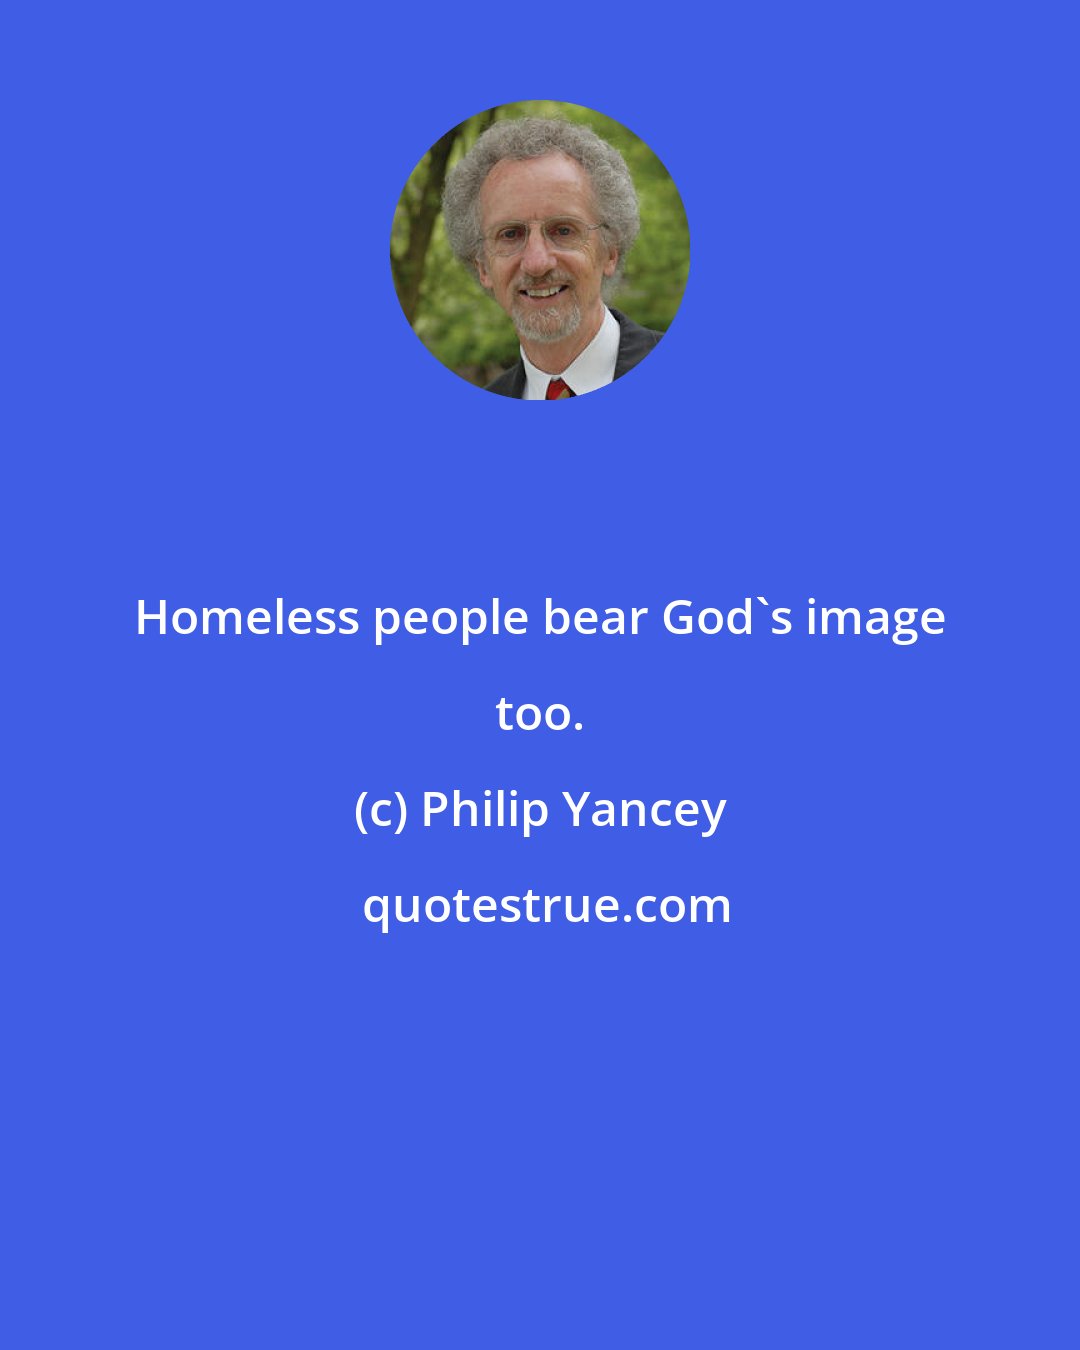 Philip Yancey: Homeless people bear God's image too.